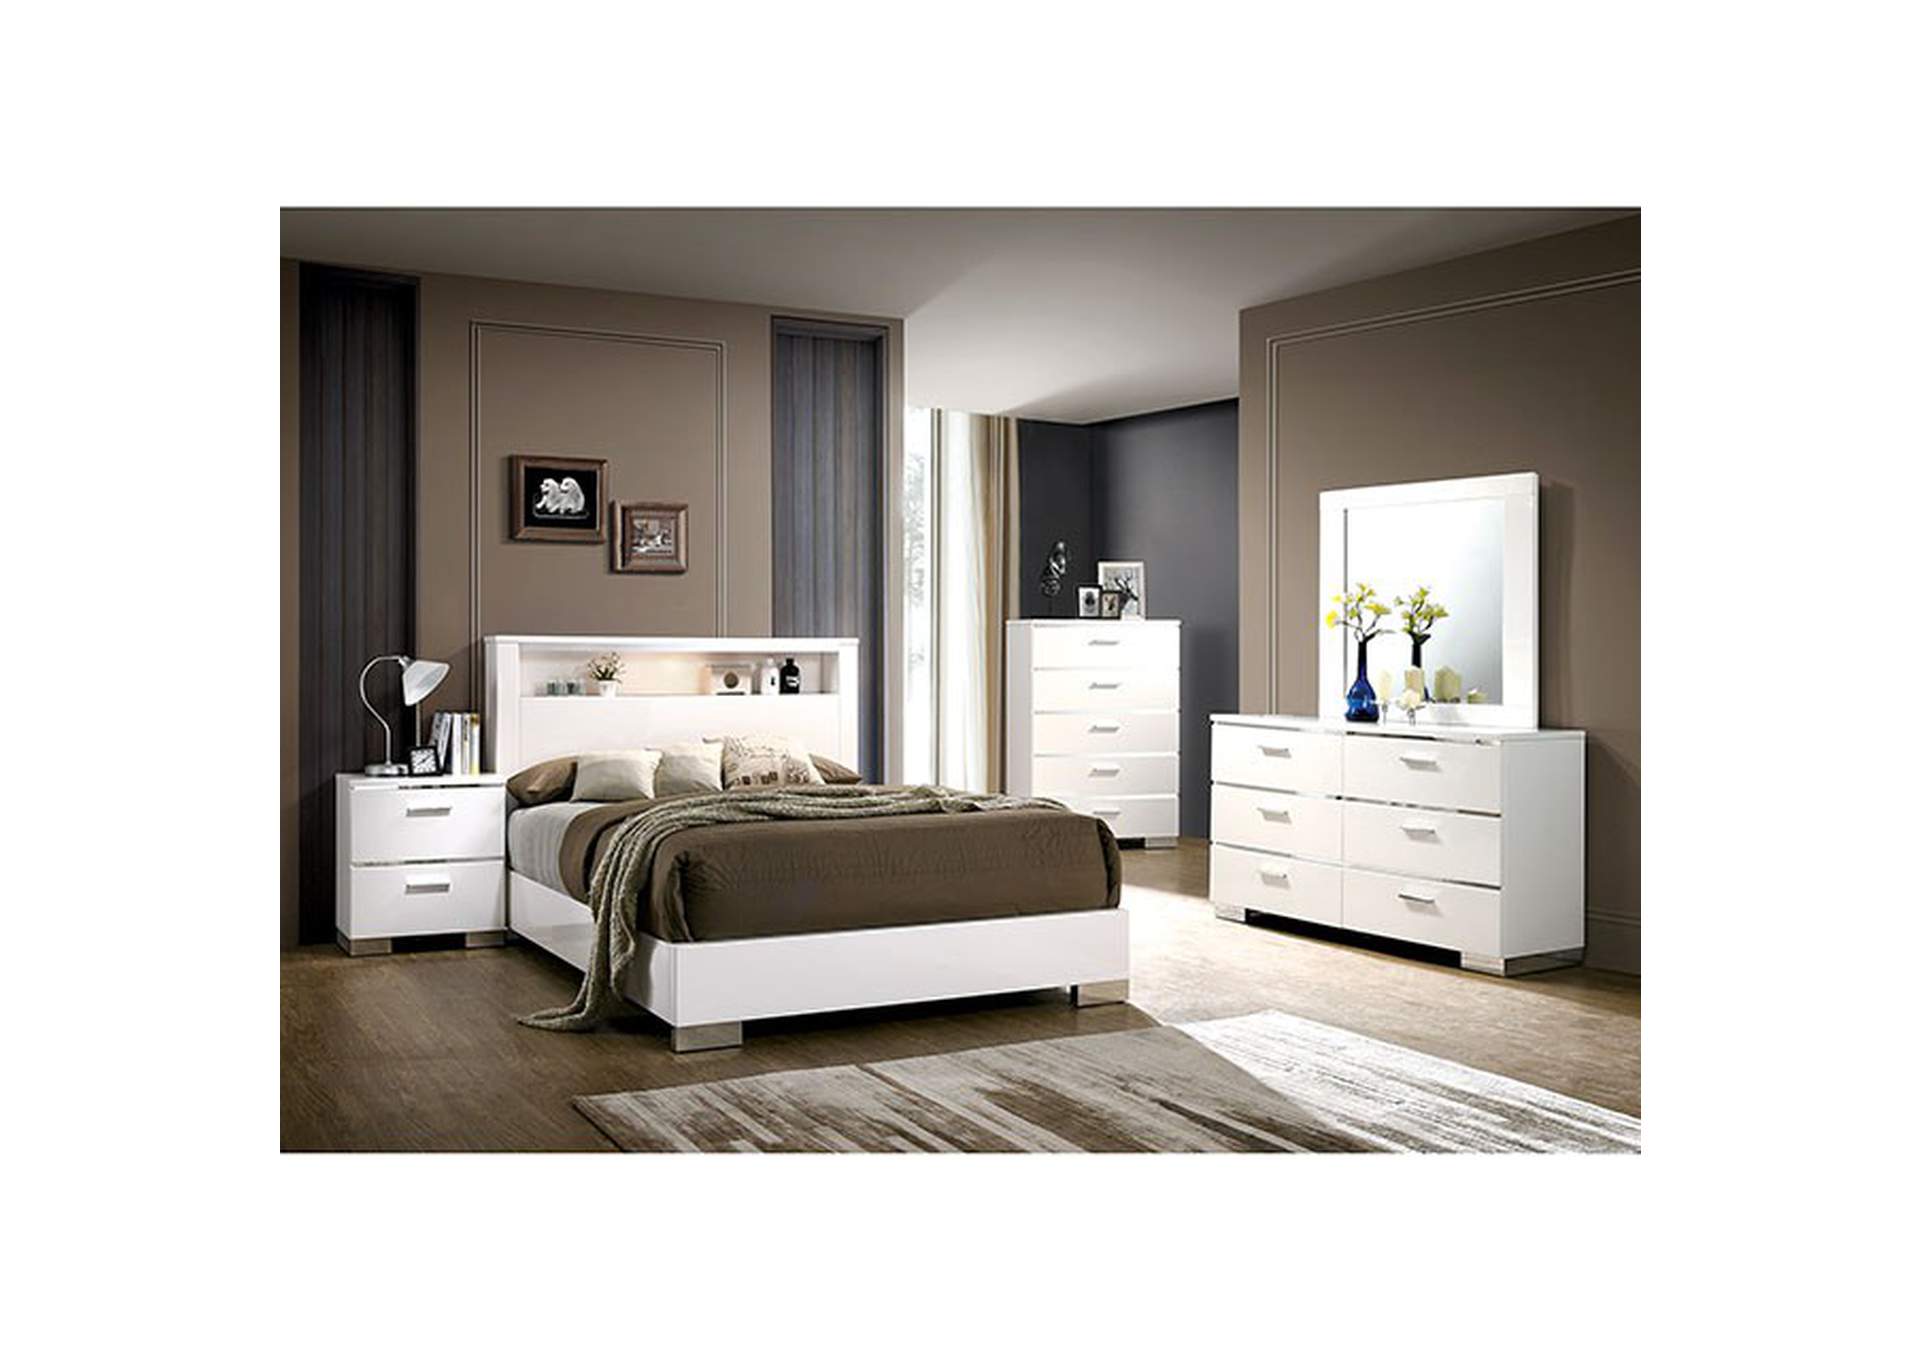 Carlie Queen Bed,Furniture of America